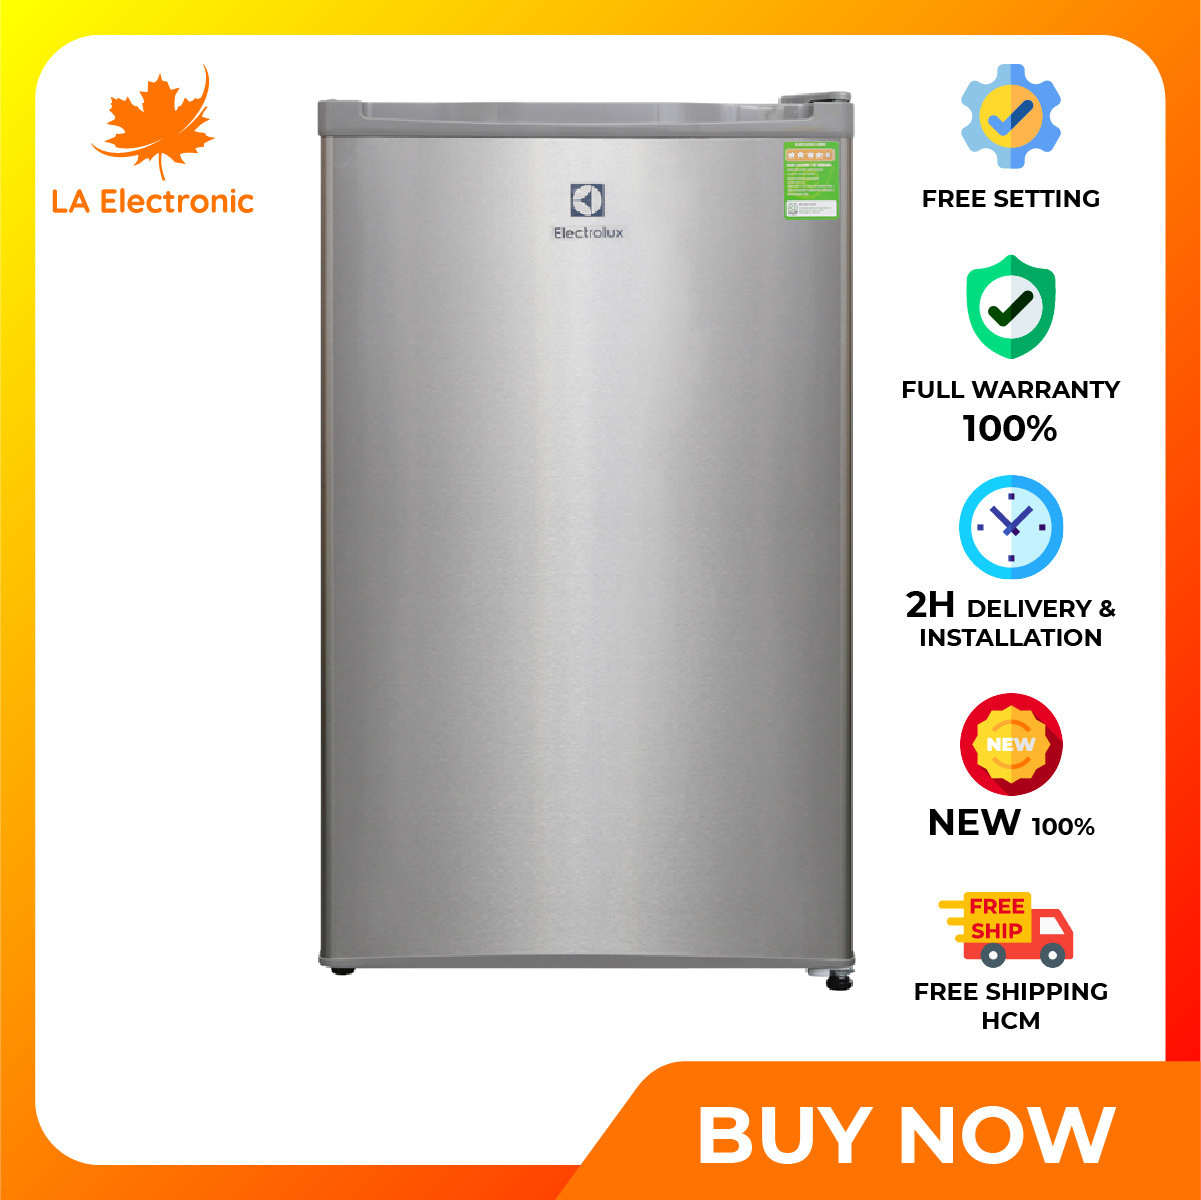 Tủ lạnh – Electrolux refrigerator 85 liters EUM0900SA – Free shipping HCM